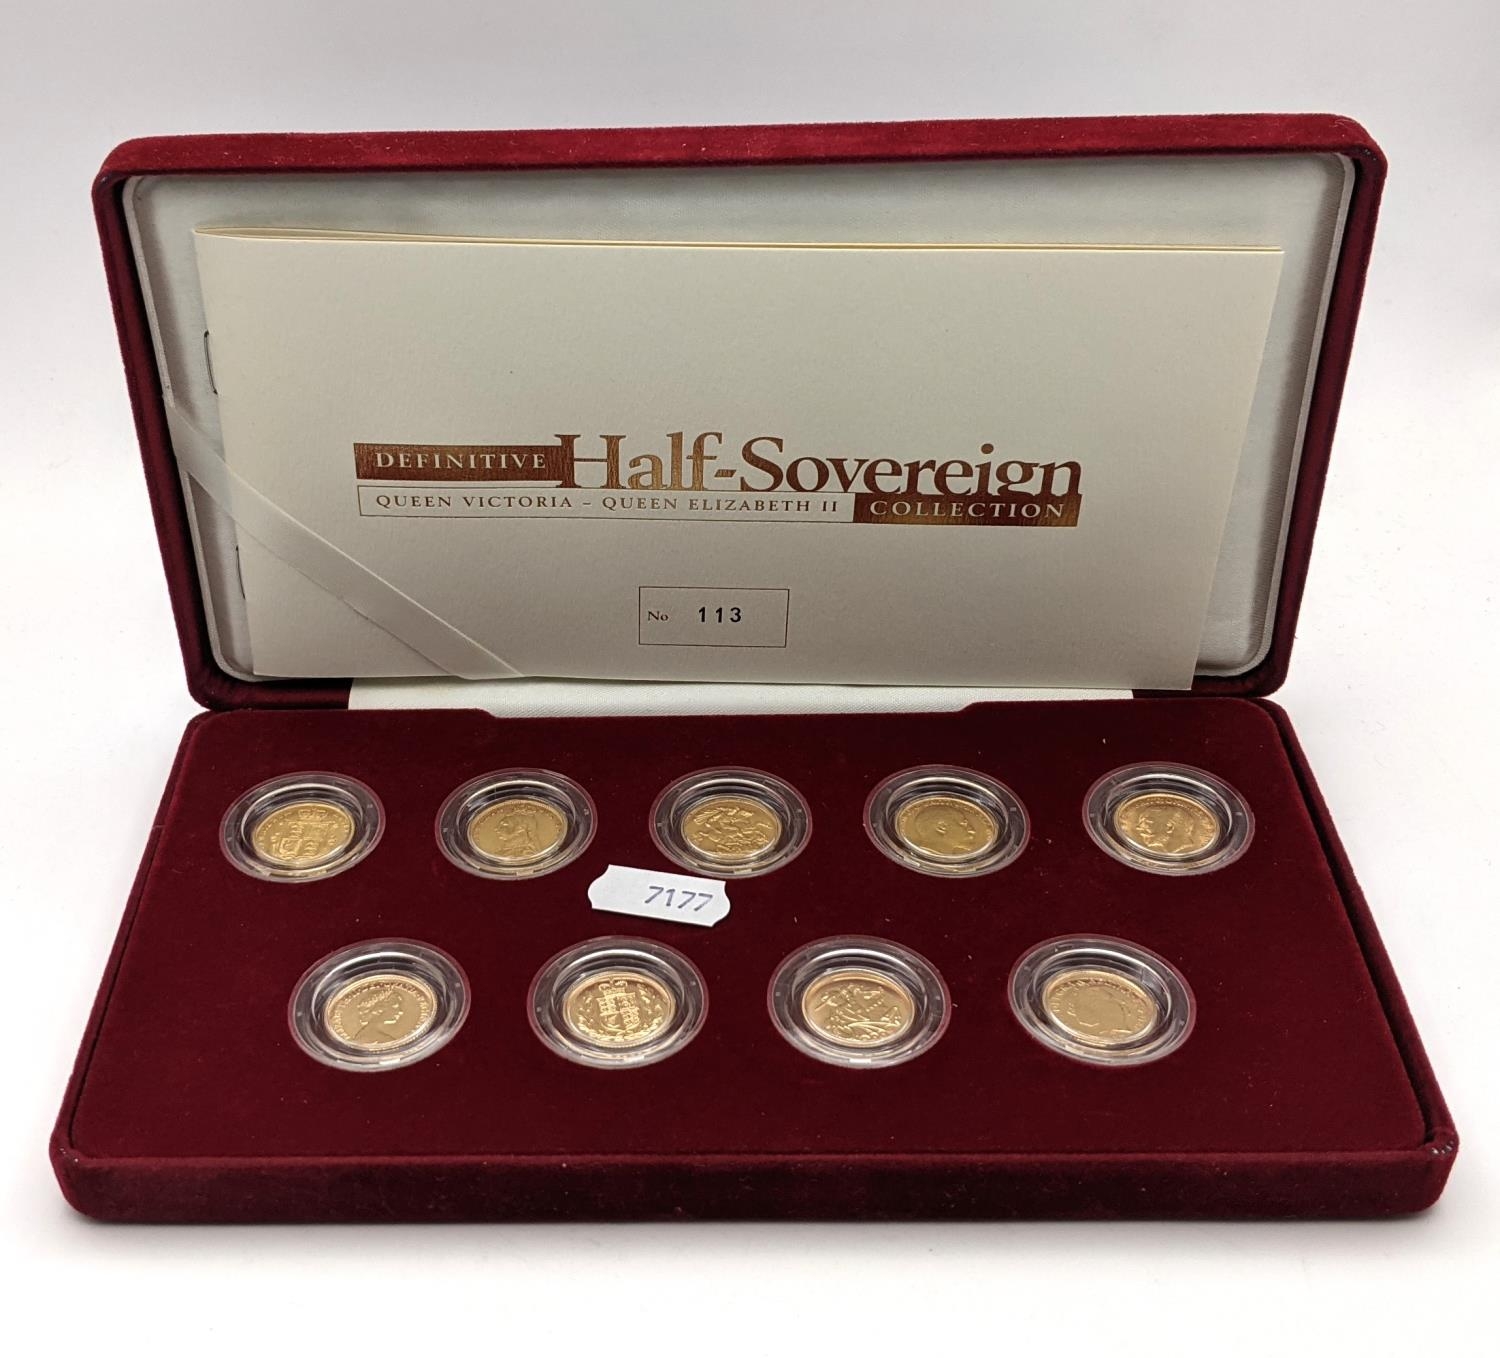 United Kingdom - Mixed Monarchs - Royal Mint Definitive Half-Sovereign Queen Victoria - Queen